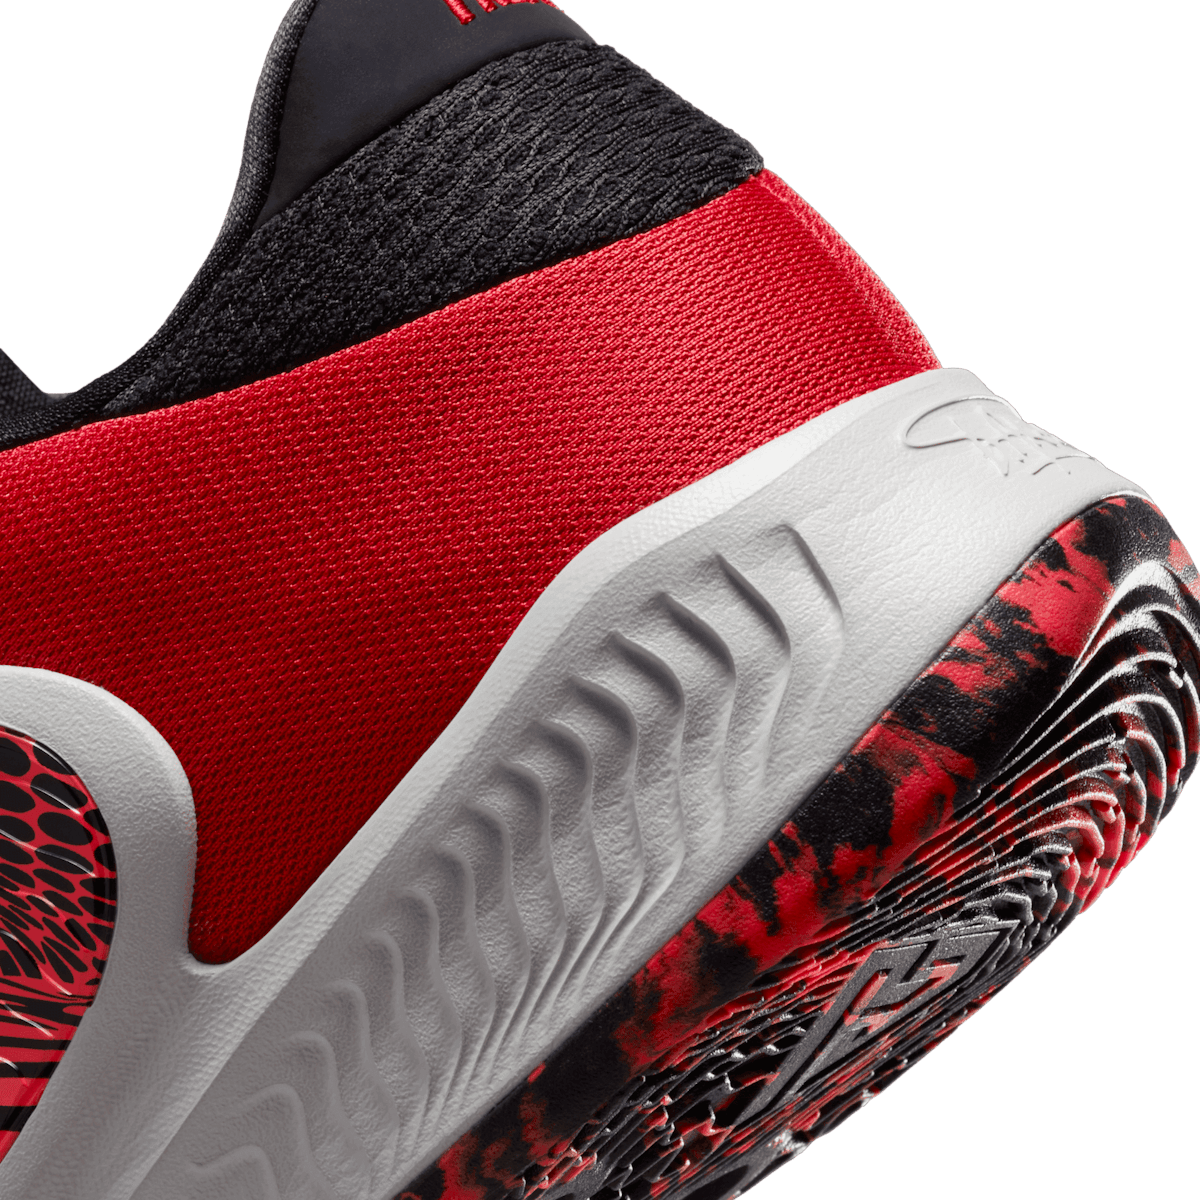 Nike Zoom Freak 4 "Safari" Basketball Shoes in Red Angle 5